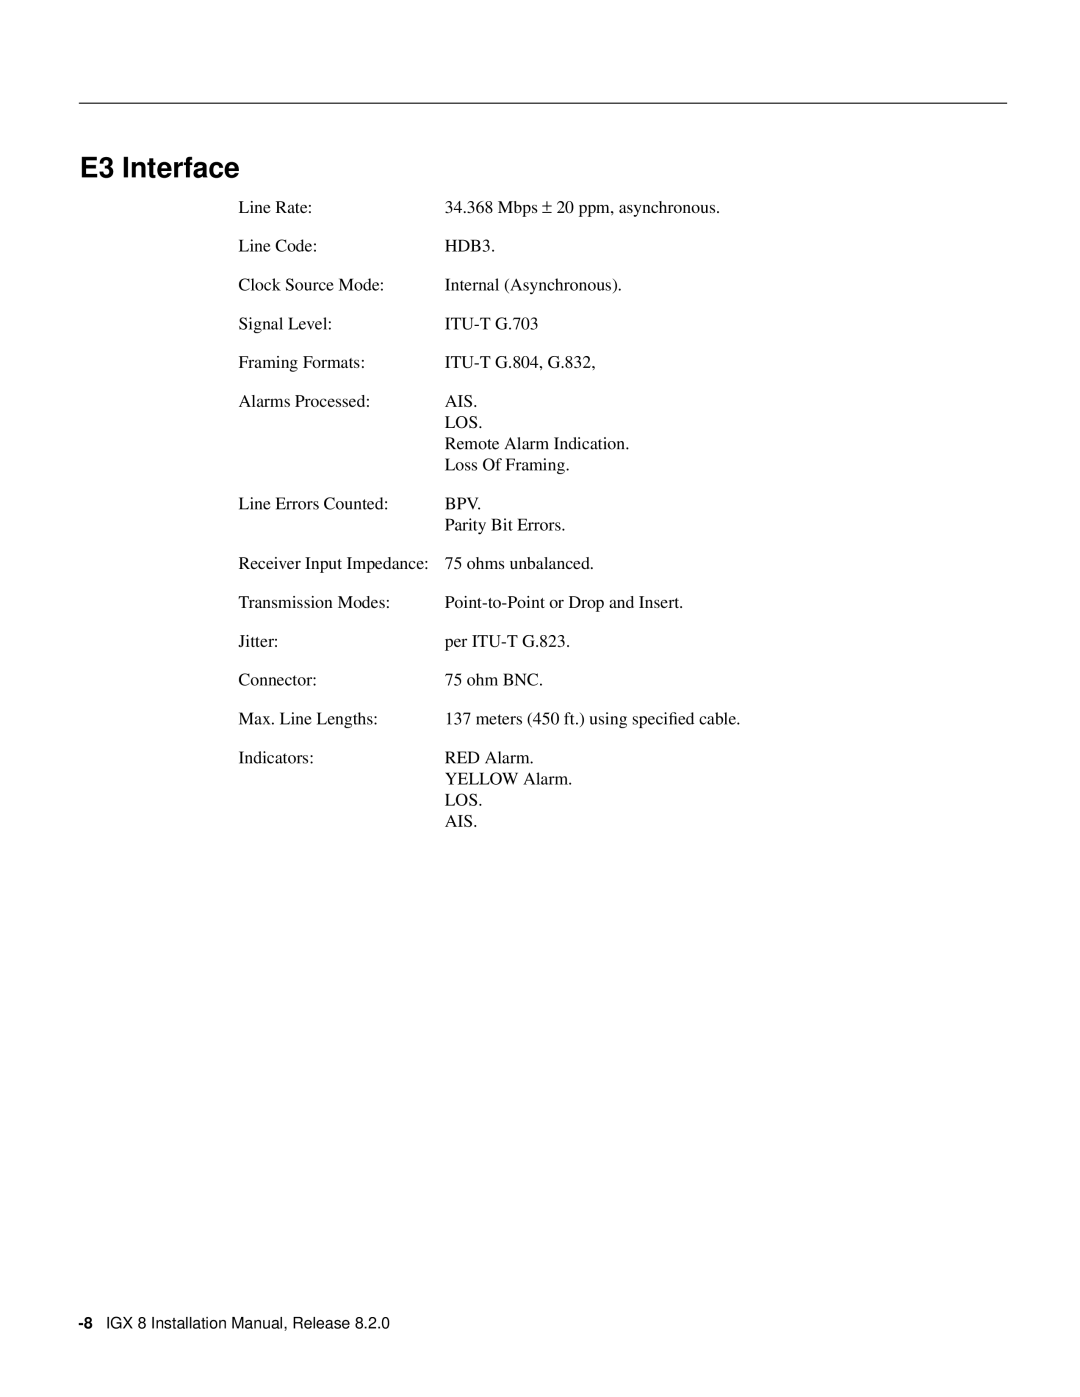 Cisco Systems appendix E3 Interface, IGX 8 Installation Manual, Release 